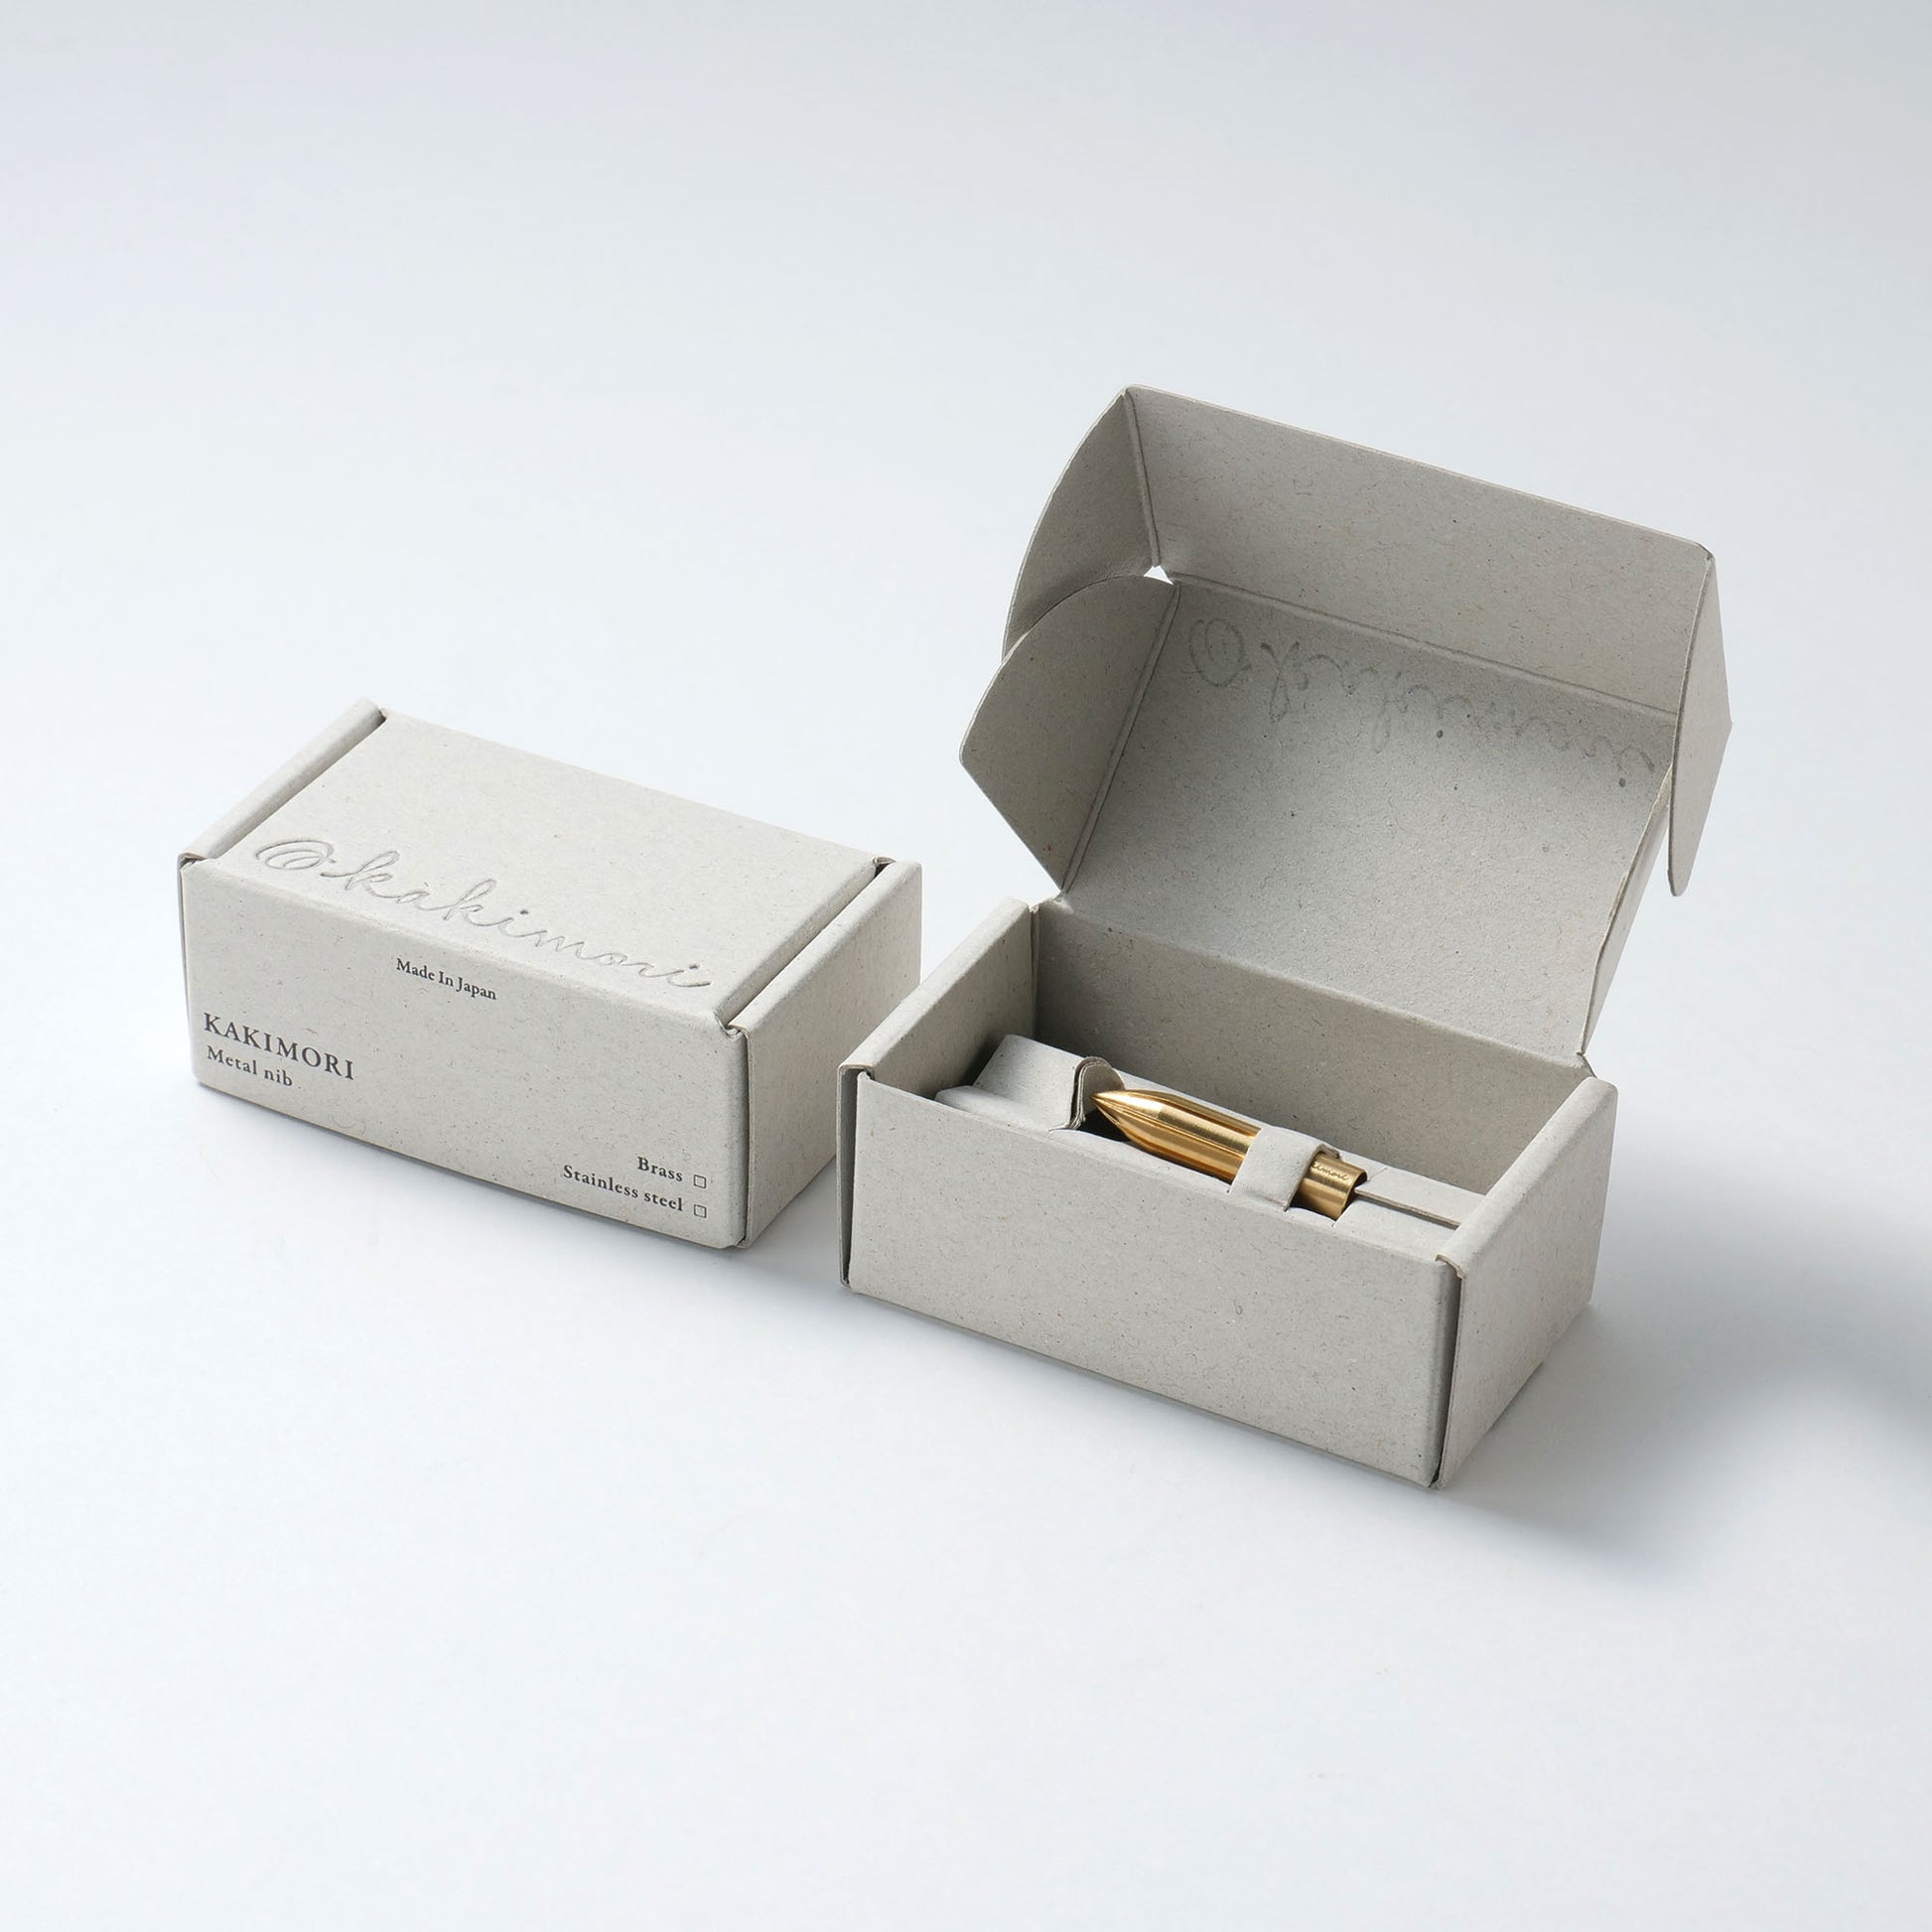 Kakimori Metal Nib - Brass - Dip Pen Nib Made in Japan in box